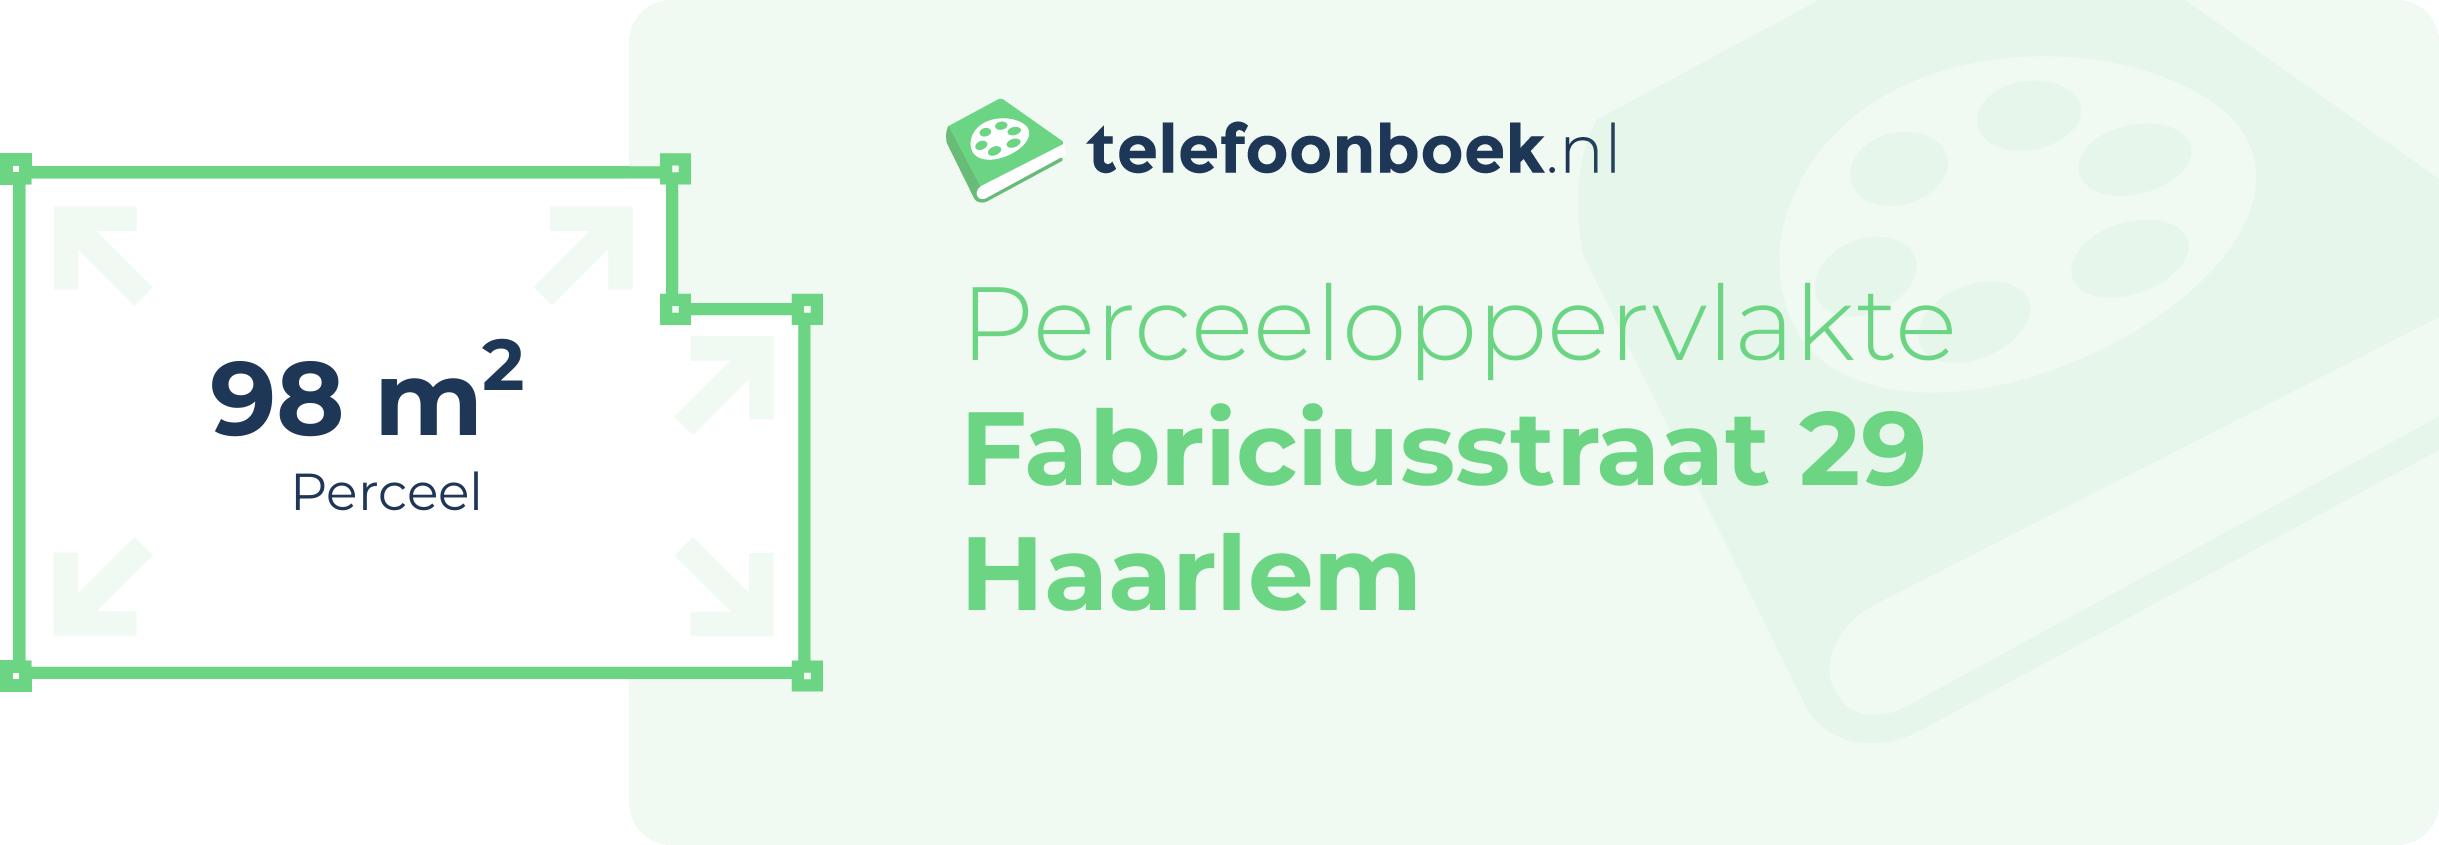 Perceeloppervlakte Fabriciusstraat 29 Haarlem